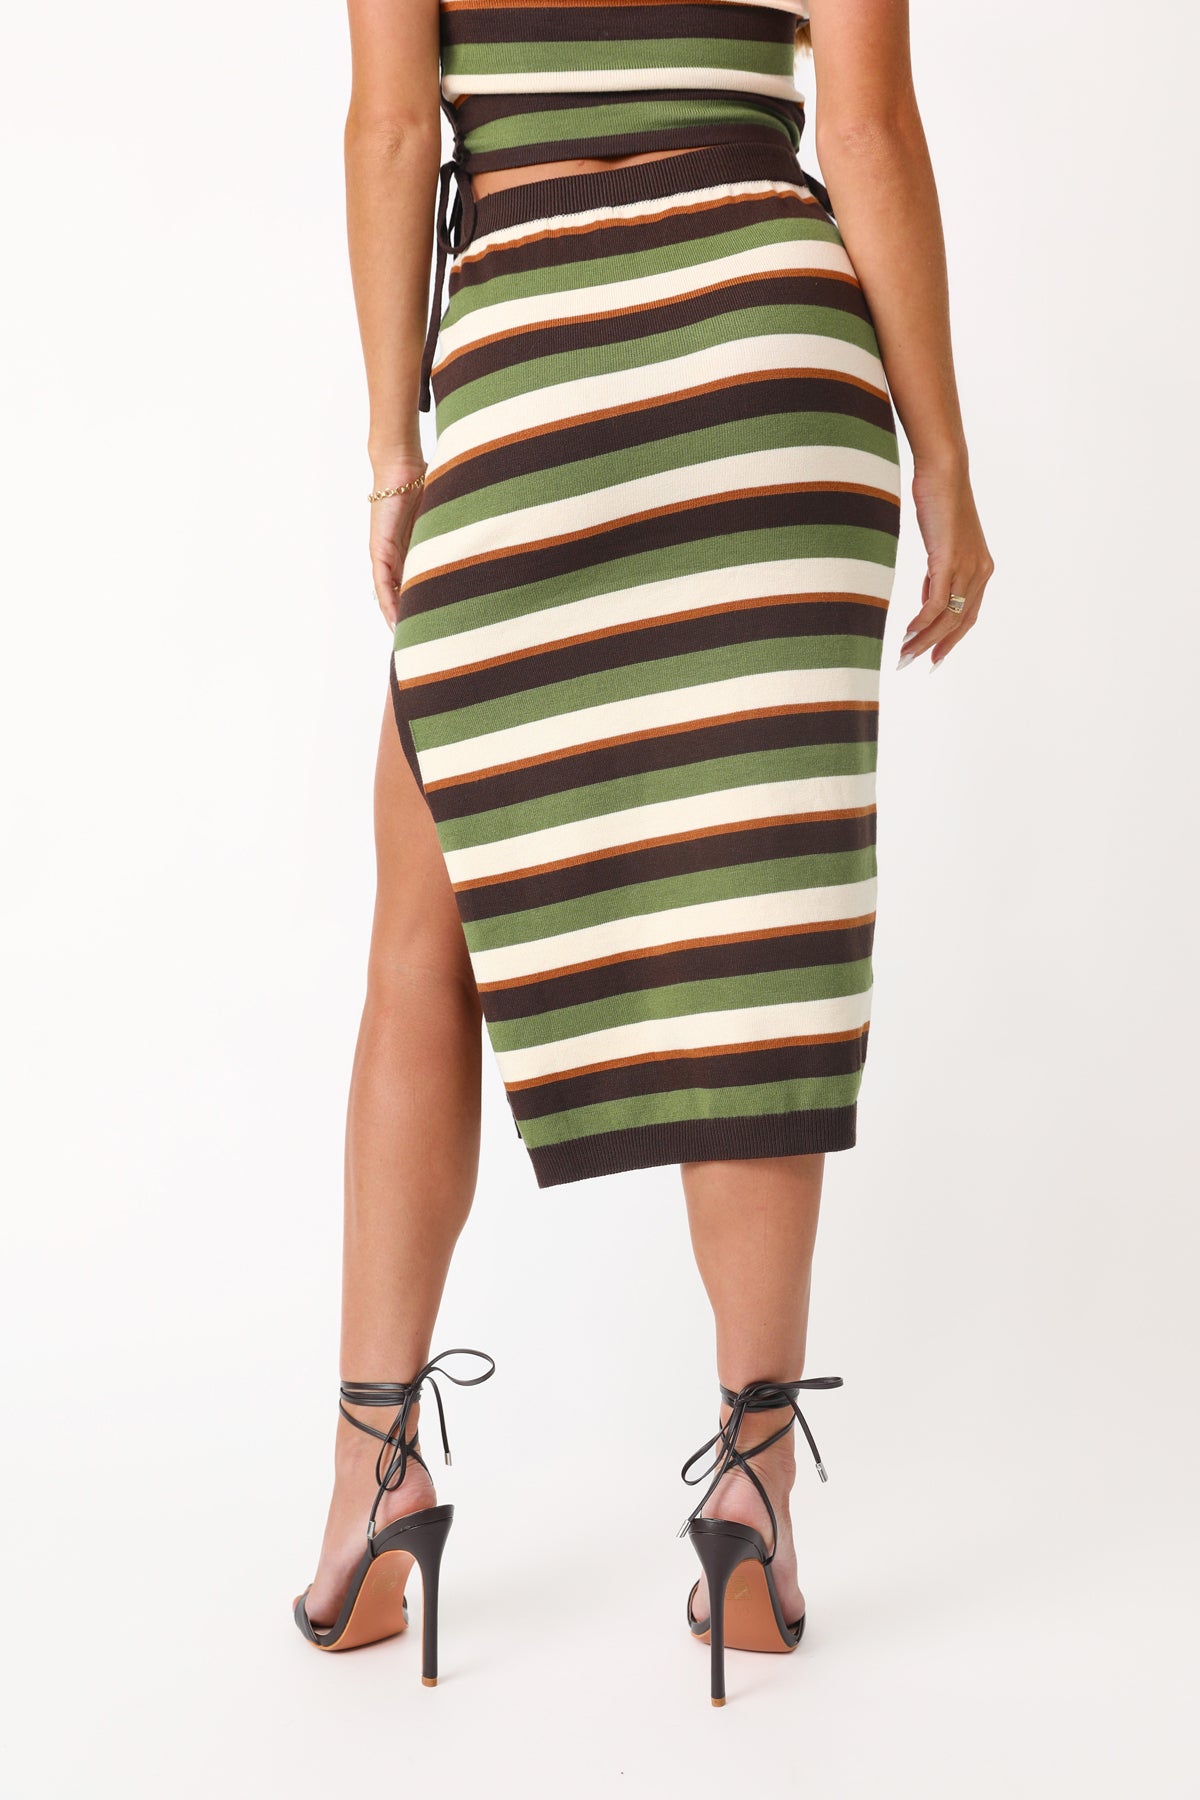 Model wearing the Destination Stripe Knit Midi Skirt.